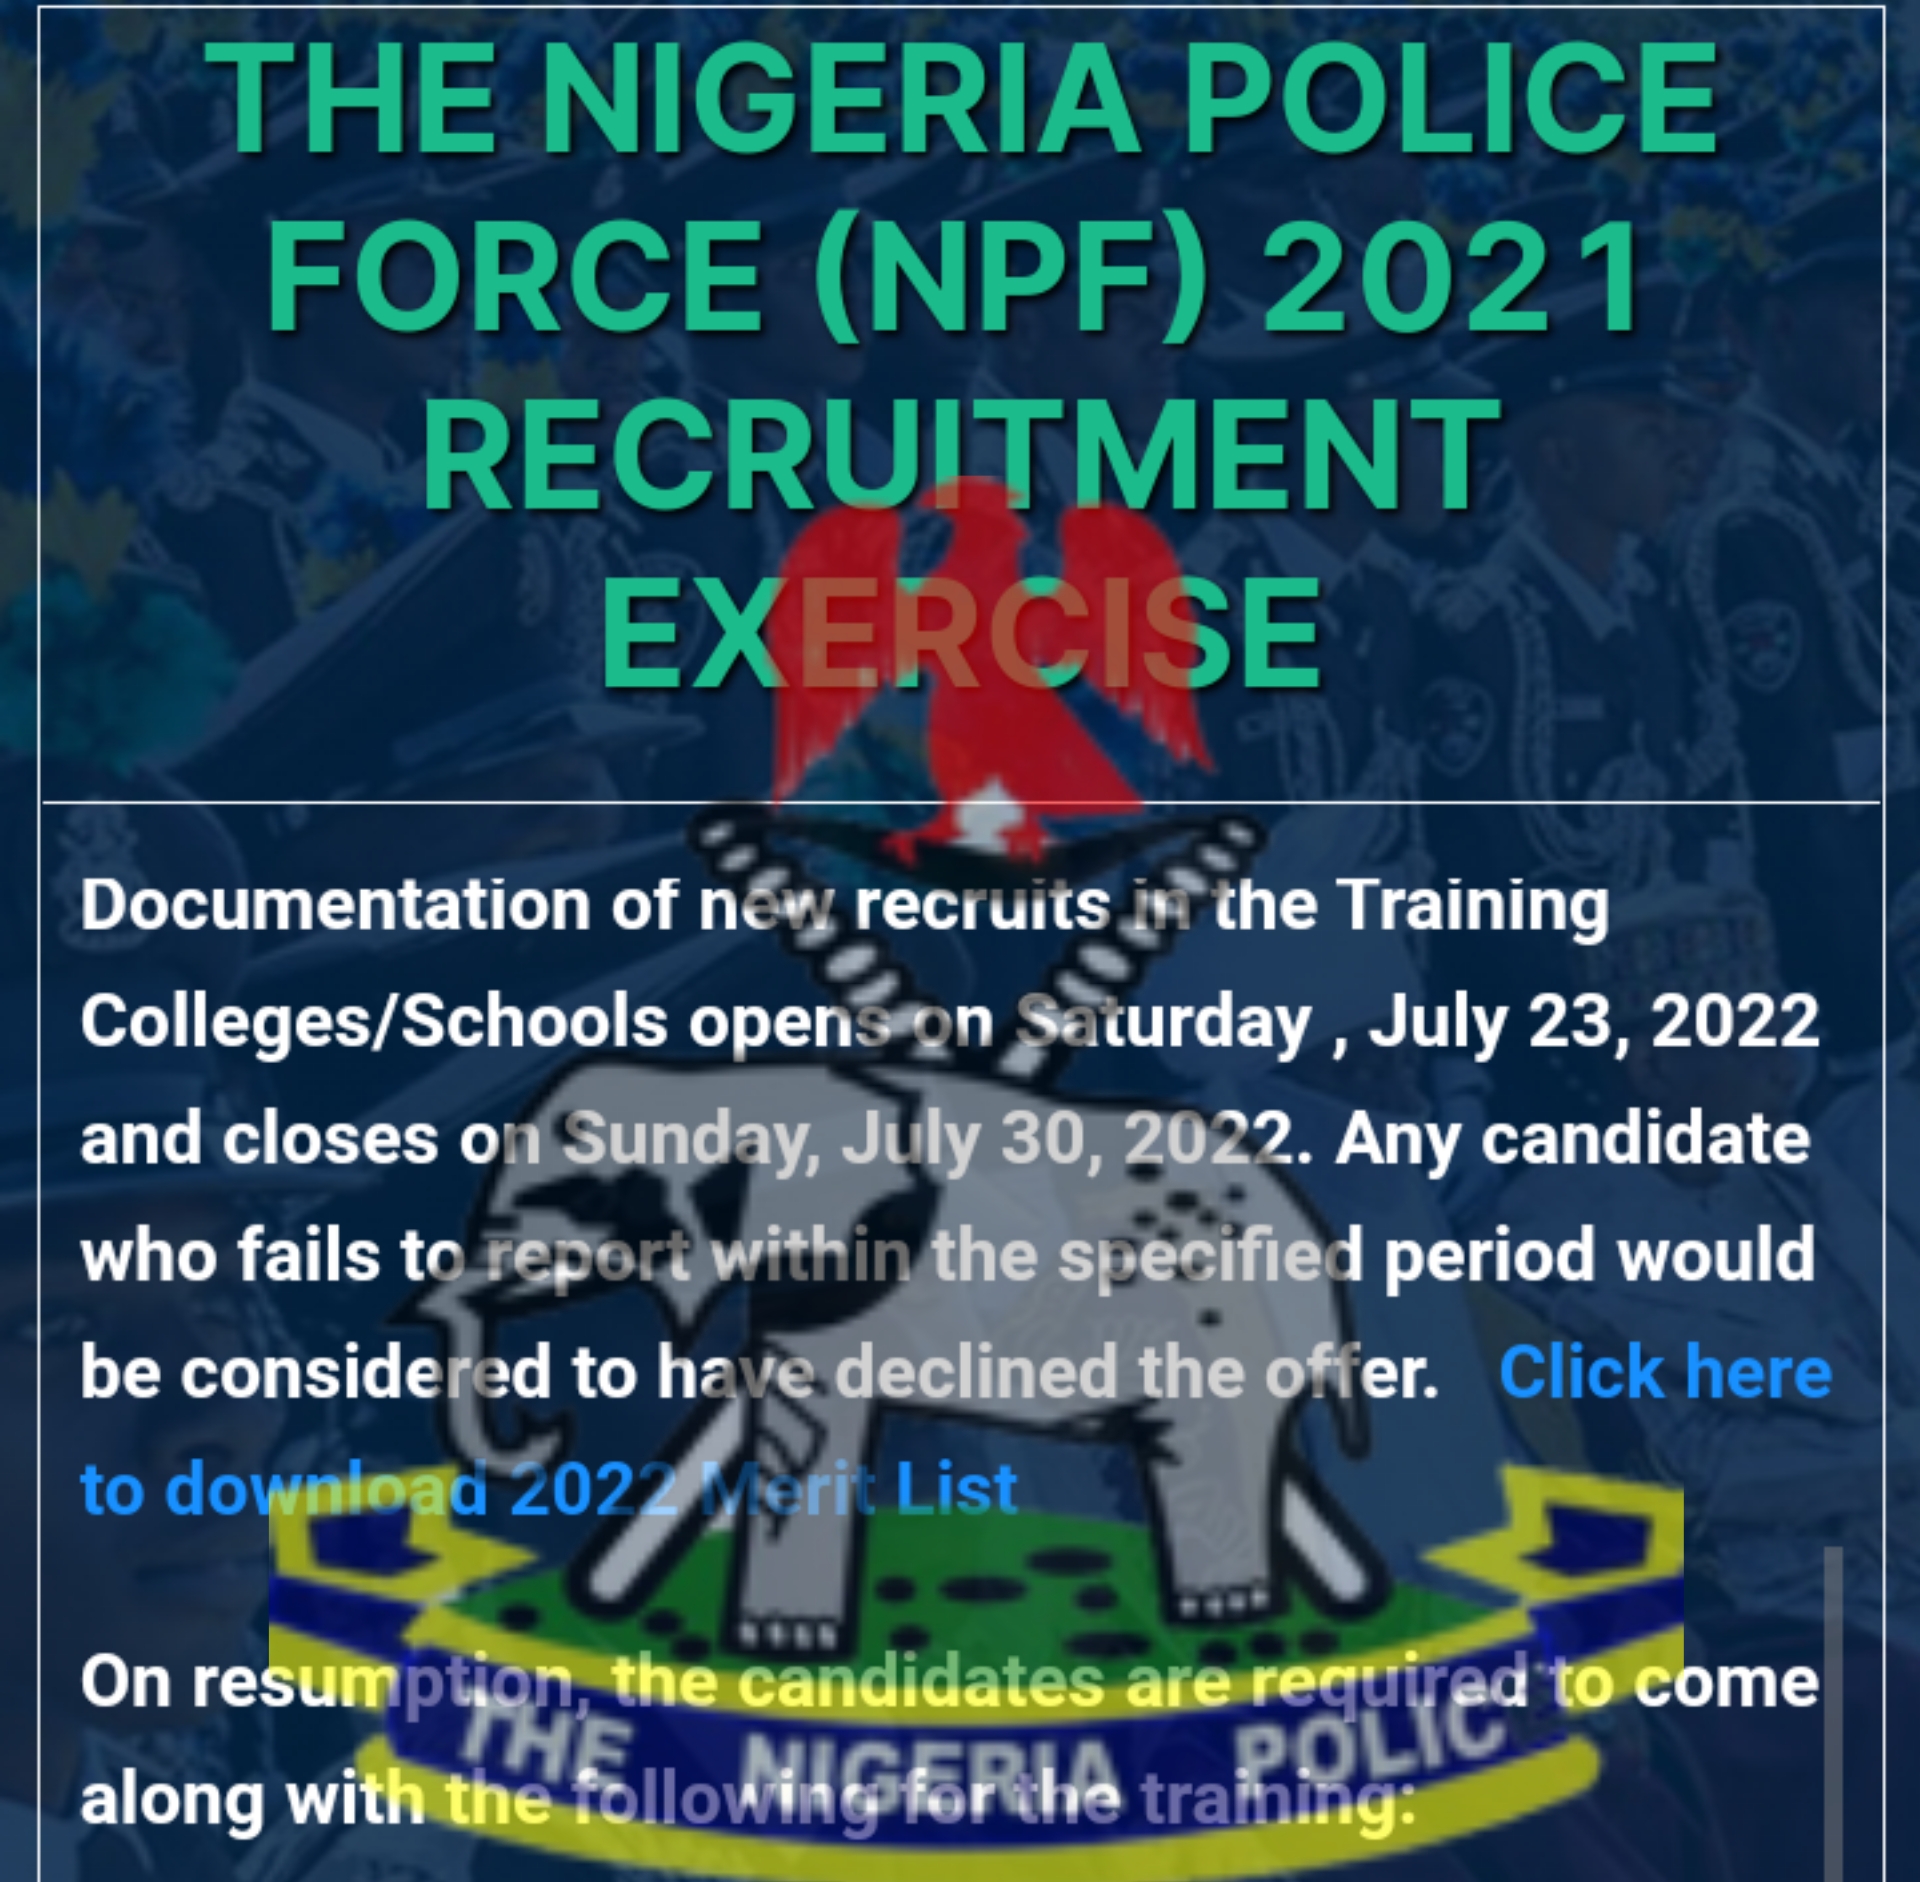 www.policerecruitment.gov.ng Link To Check NPF Recruitment Status